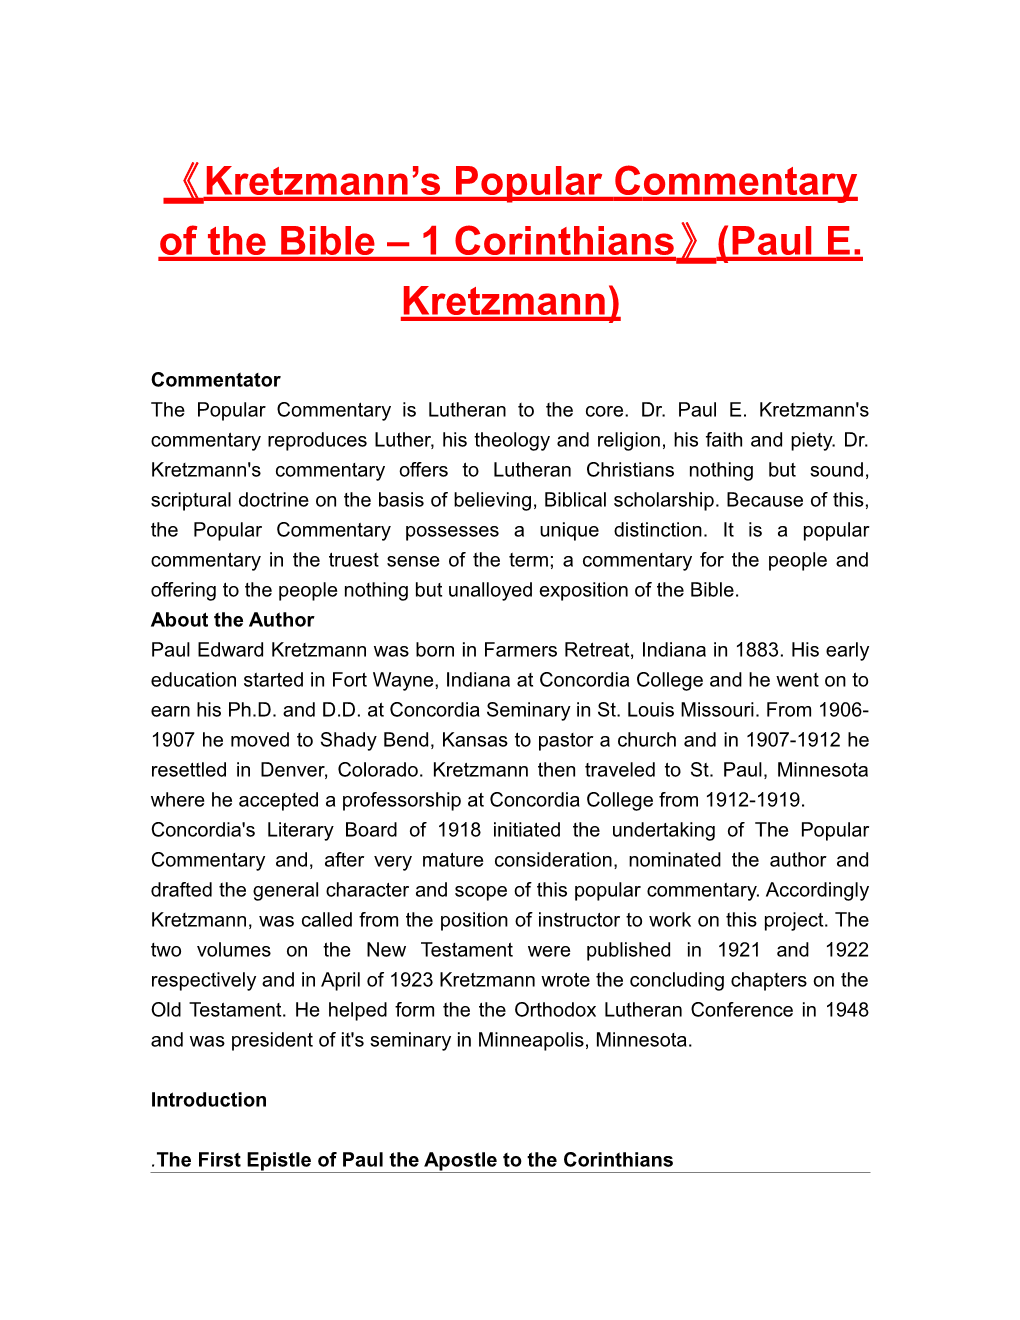 Kretzmann S Popular Commentary of the Bible 1 Corinthians (Paul E. Kretzmann)